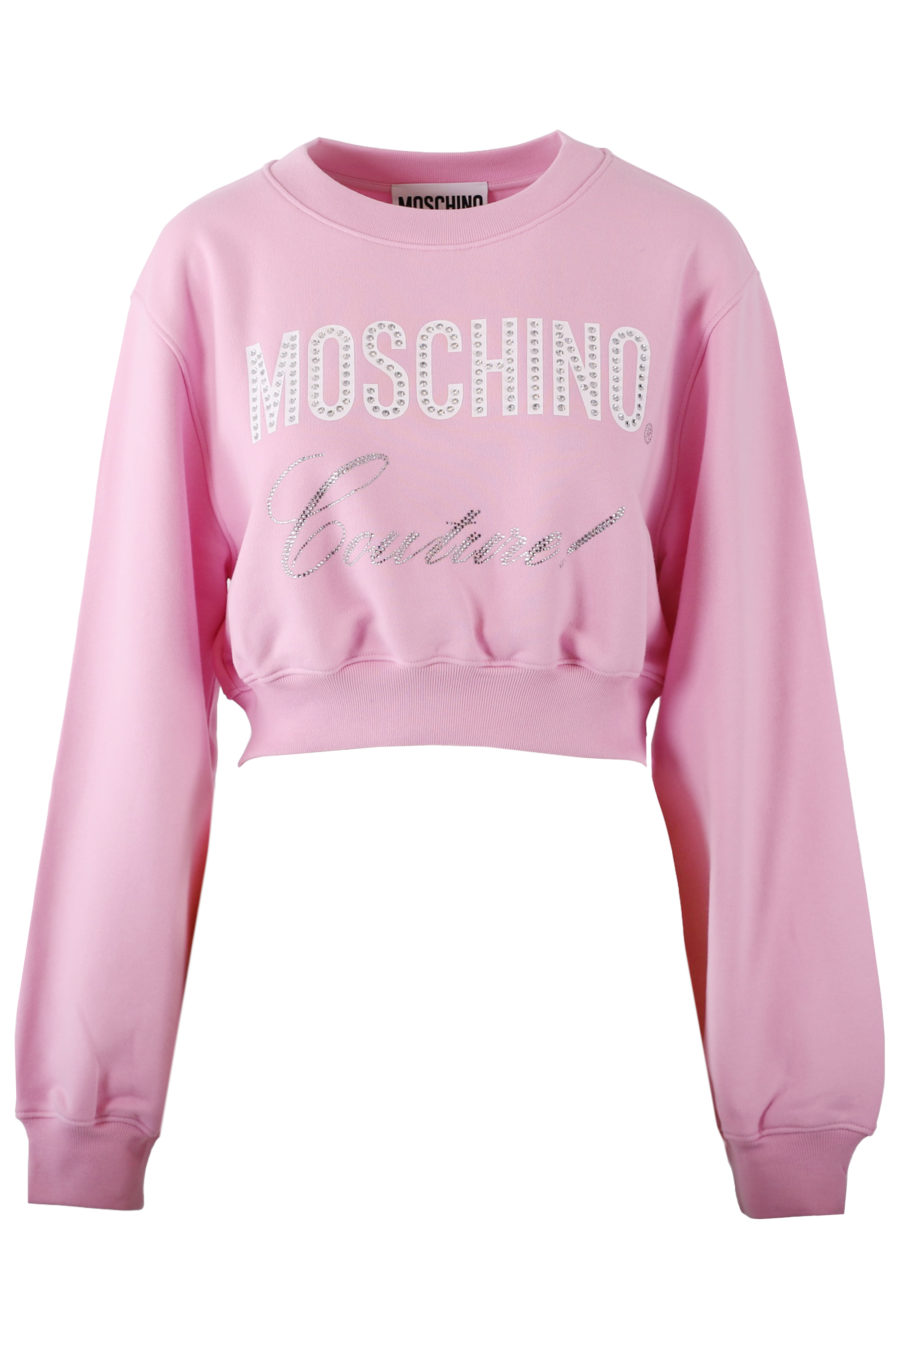 Pink sweatshirt with shiny logo - IMG 7168 copy